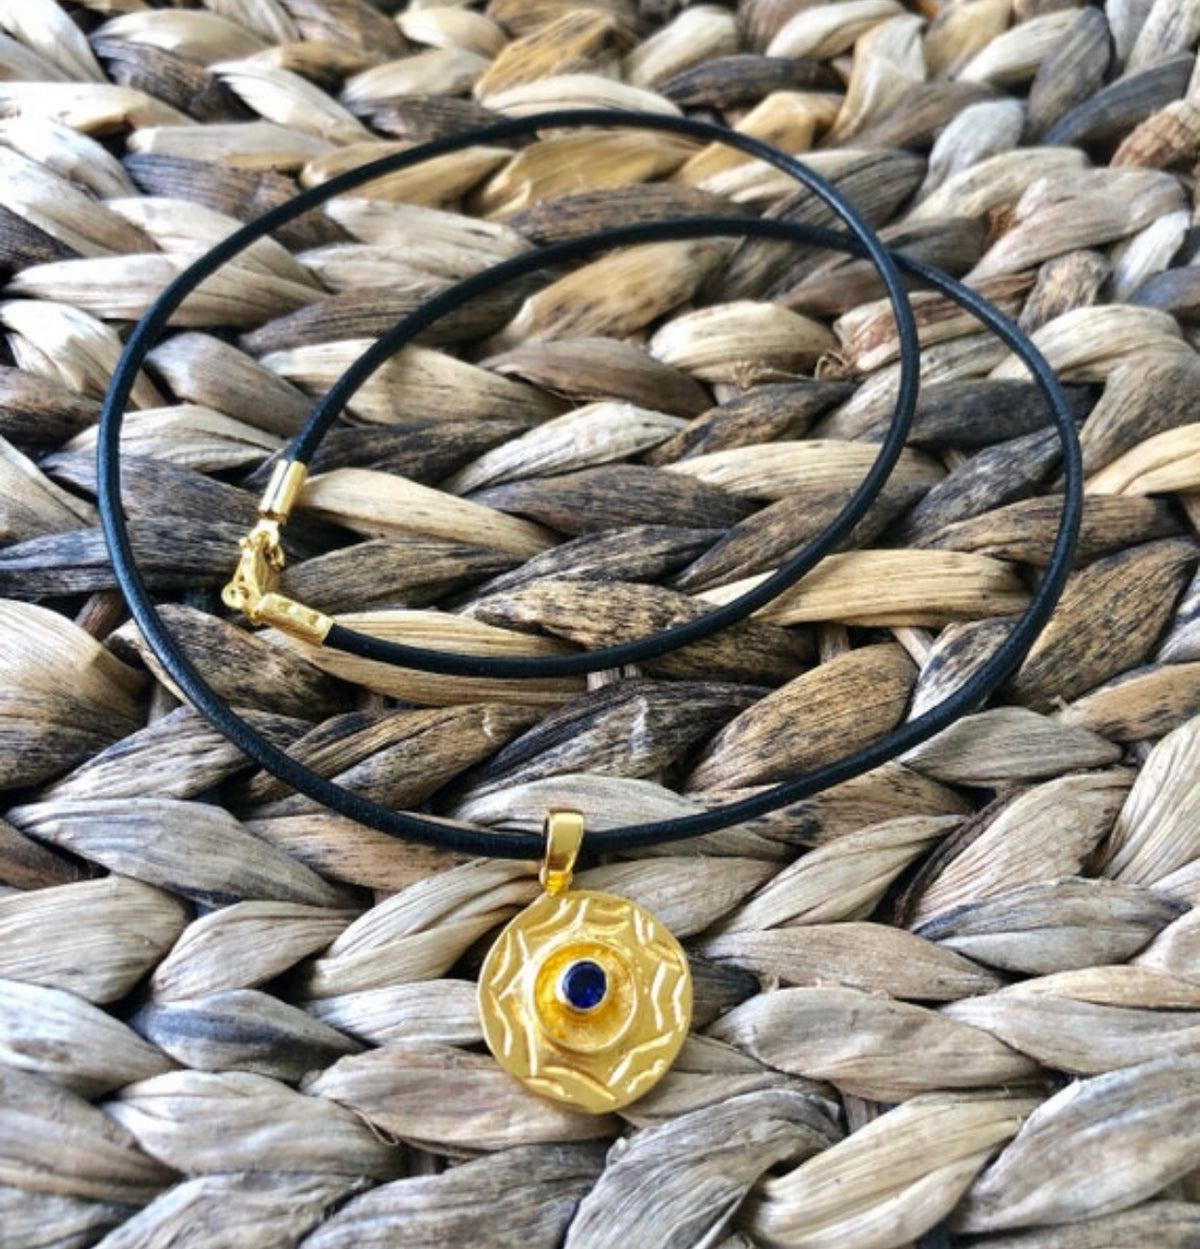 gold evil eye necklace with iolite gemstone